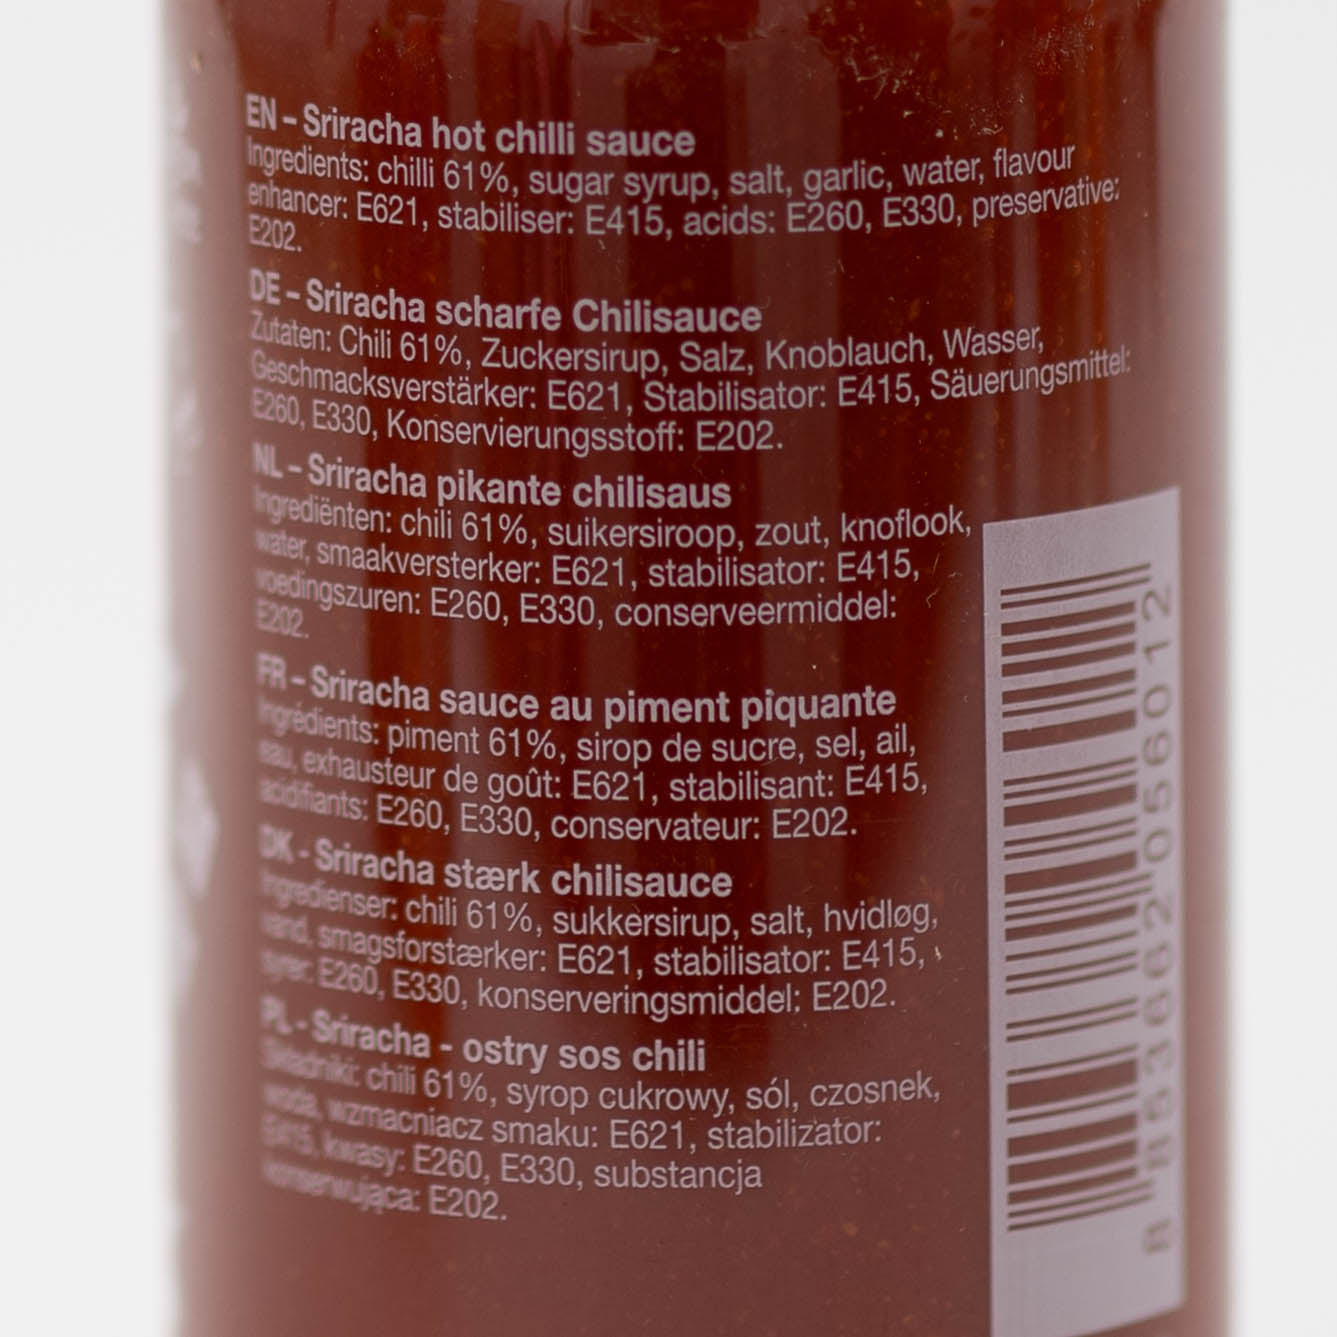 onlineshop dinese.de 455ml naehrwerte sriracha sauce original asiatische lebensmittel asiashop